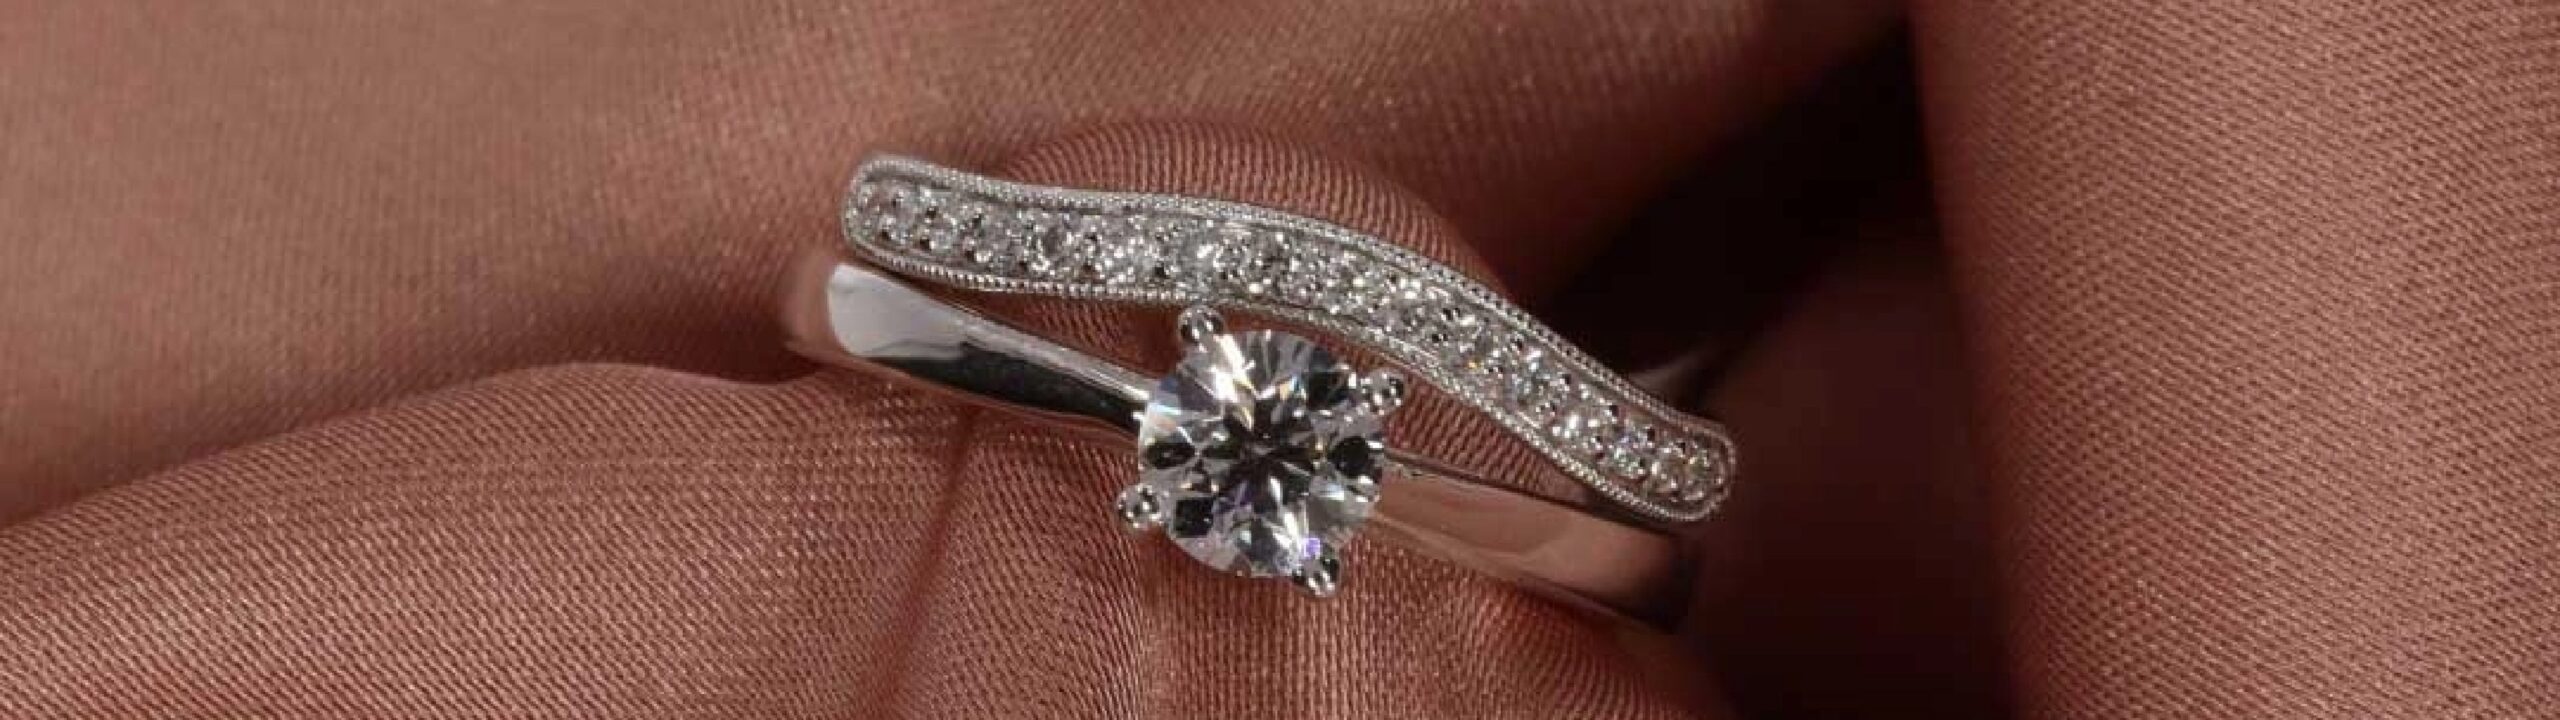 Curved Diamond Wedding Ring by Heidi Kjledsen Ltd R1792, R1719@2x